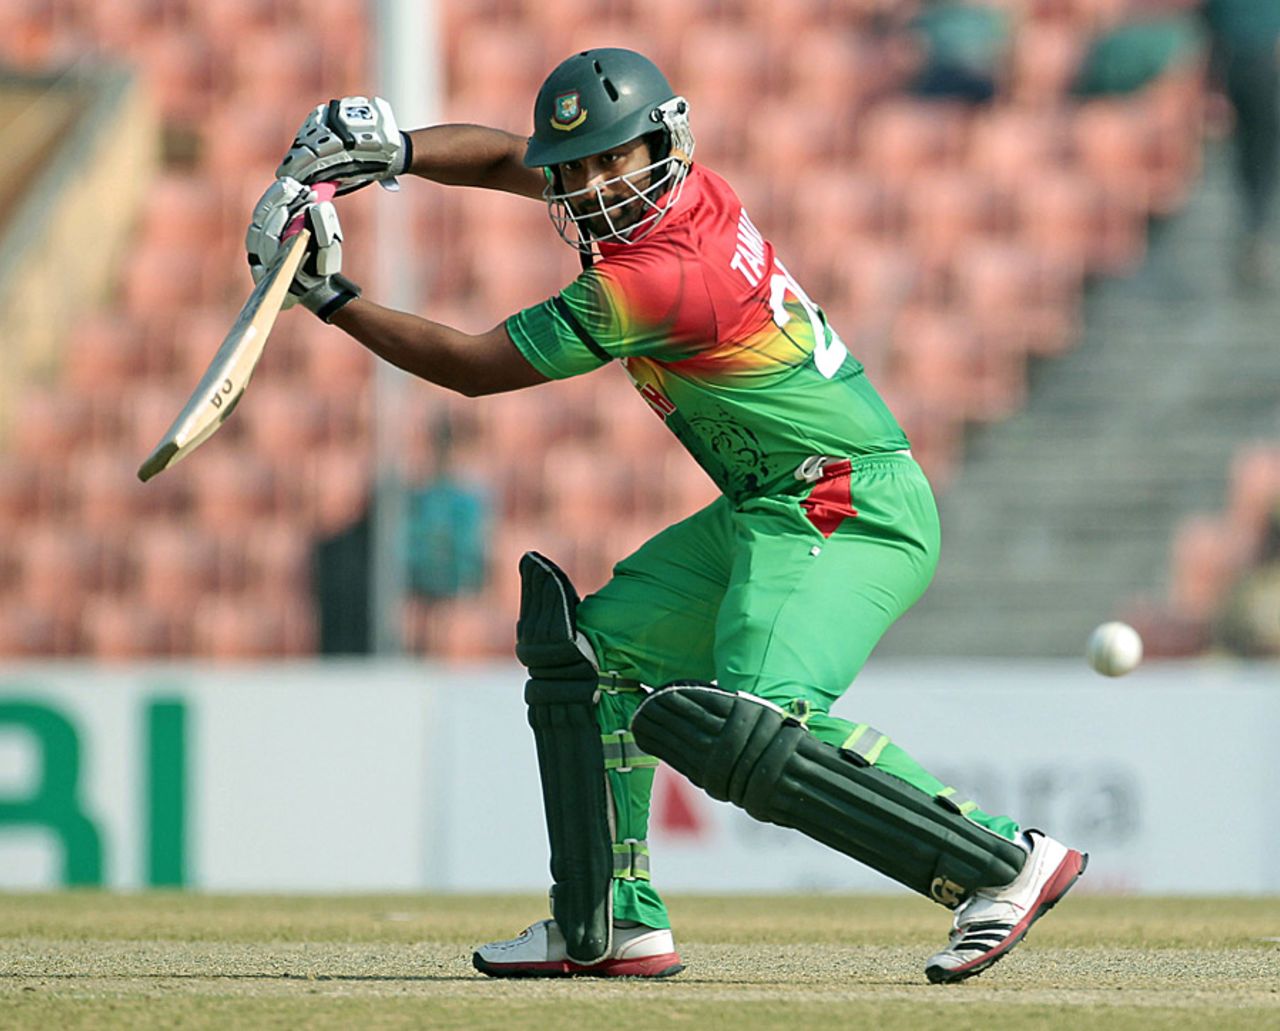 Tamim Iqbal scored 72, Bangladesh Cricket Board XI v Bangladesh Khulna, November 27, 2012